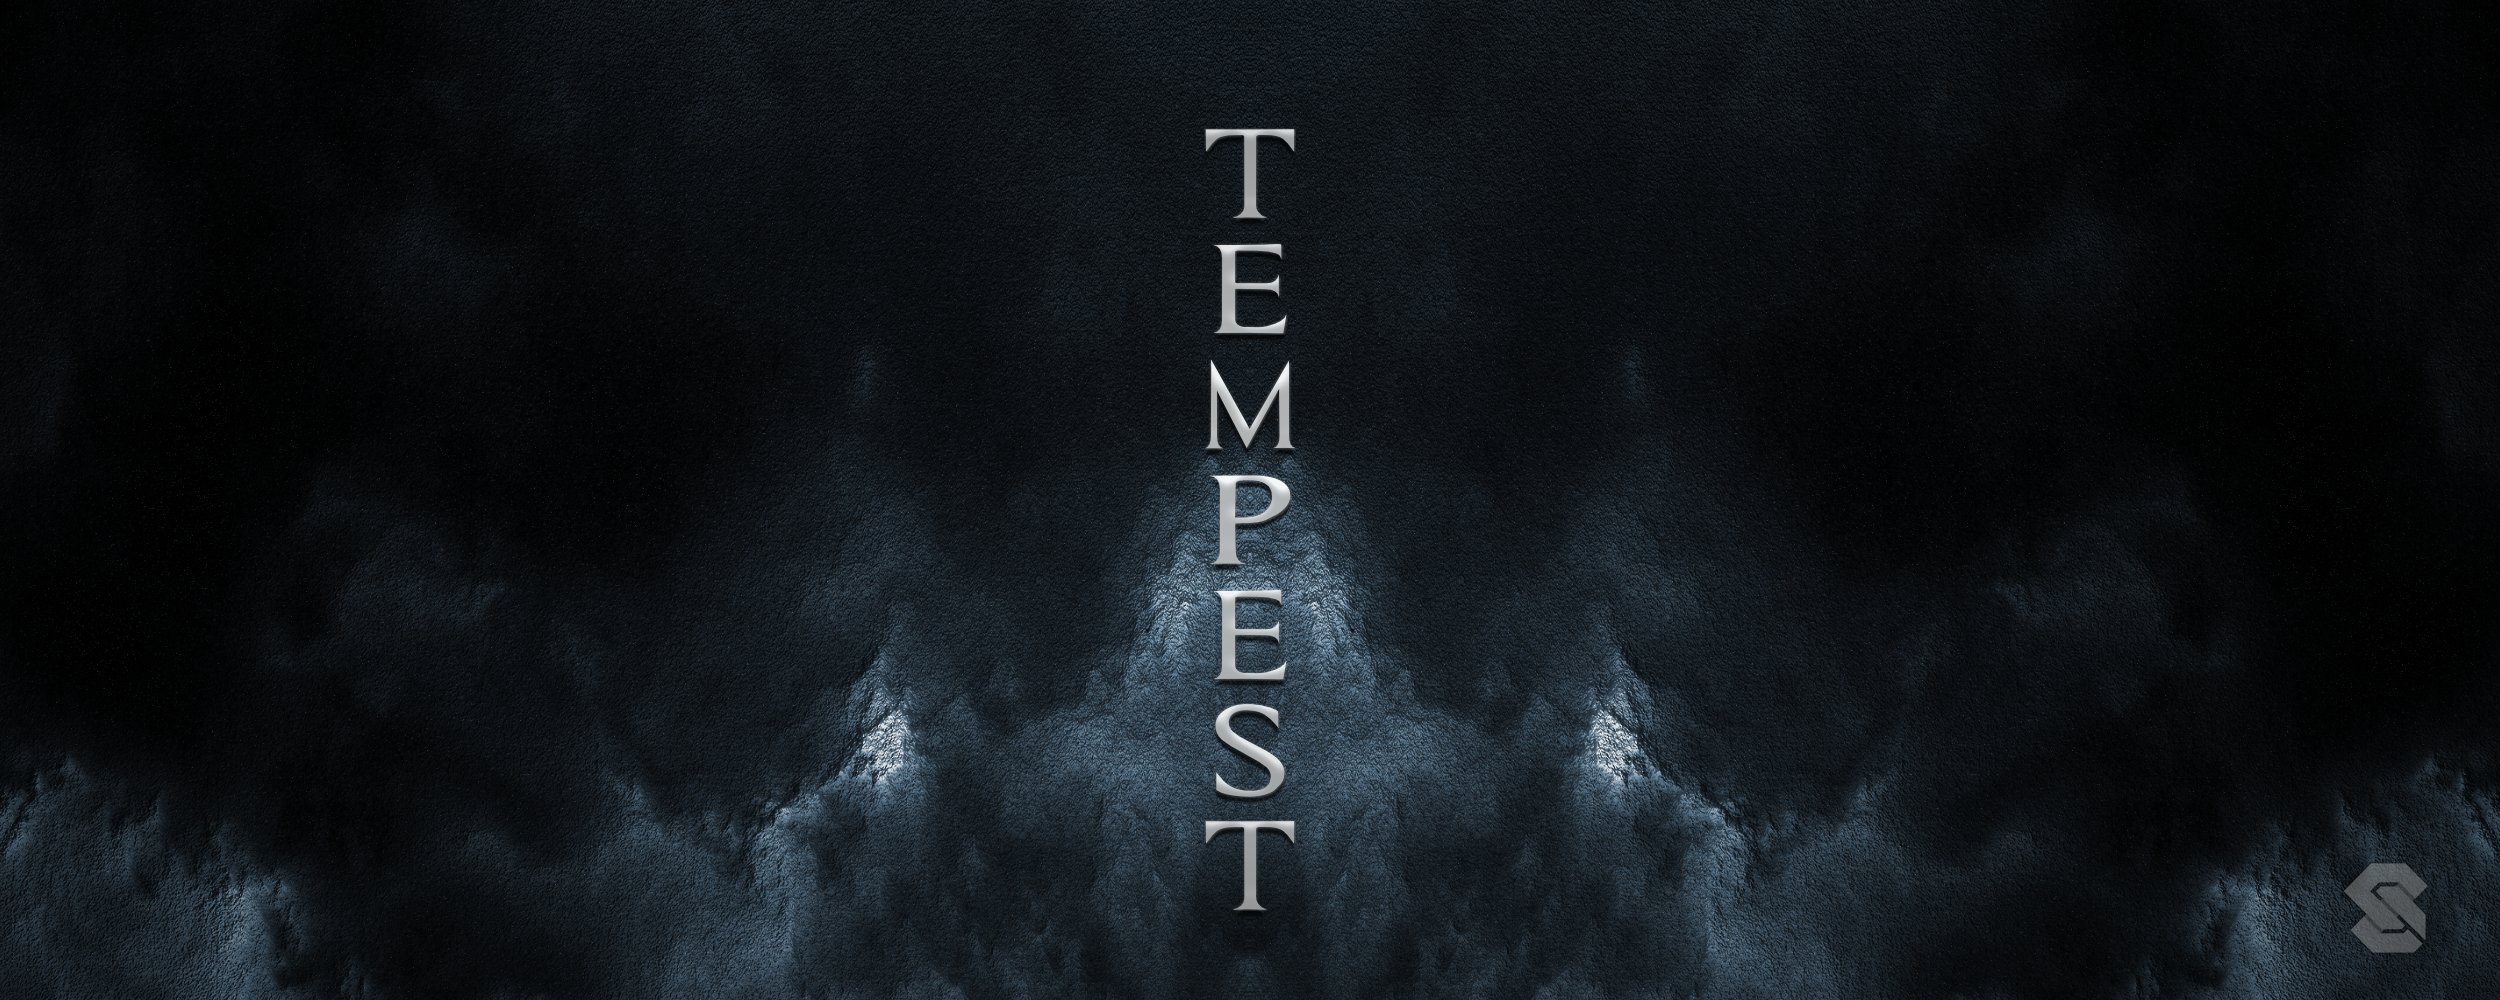 SIN010 Tempest (website banner).jpg